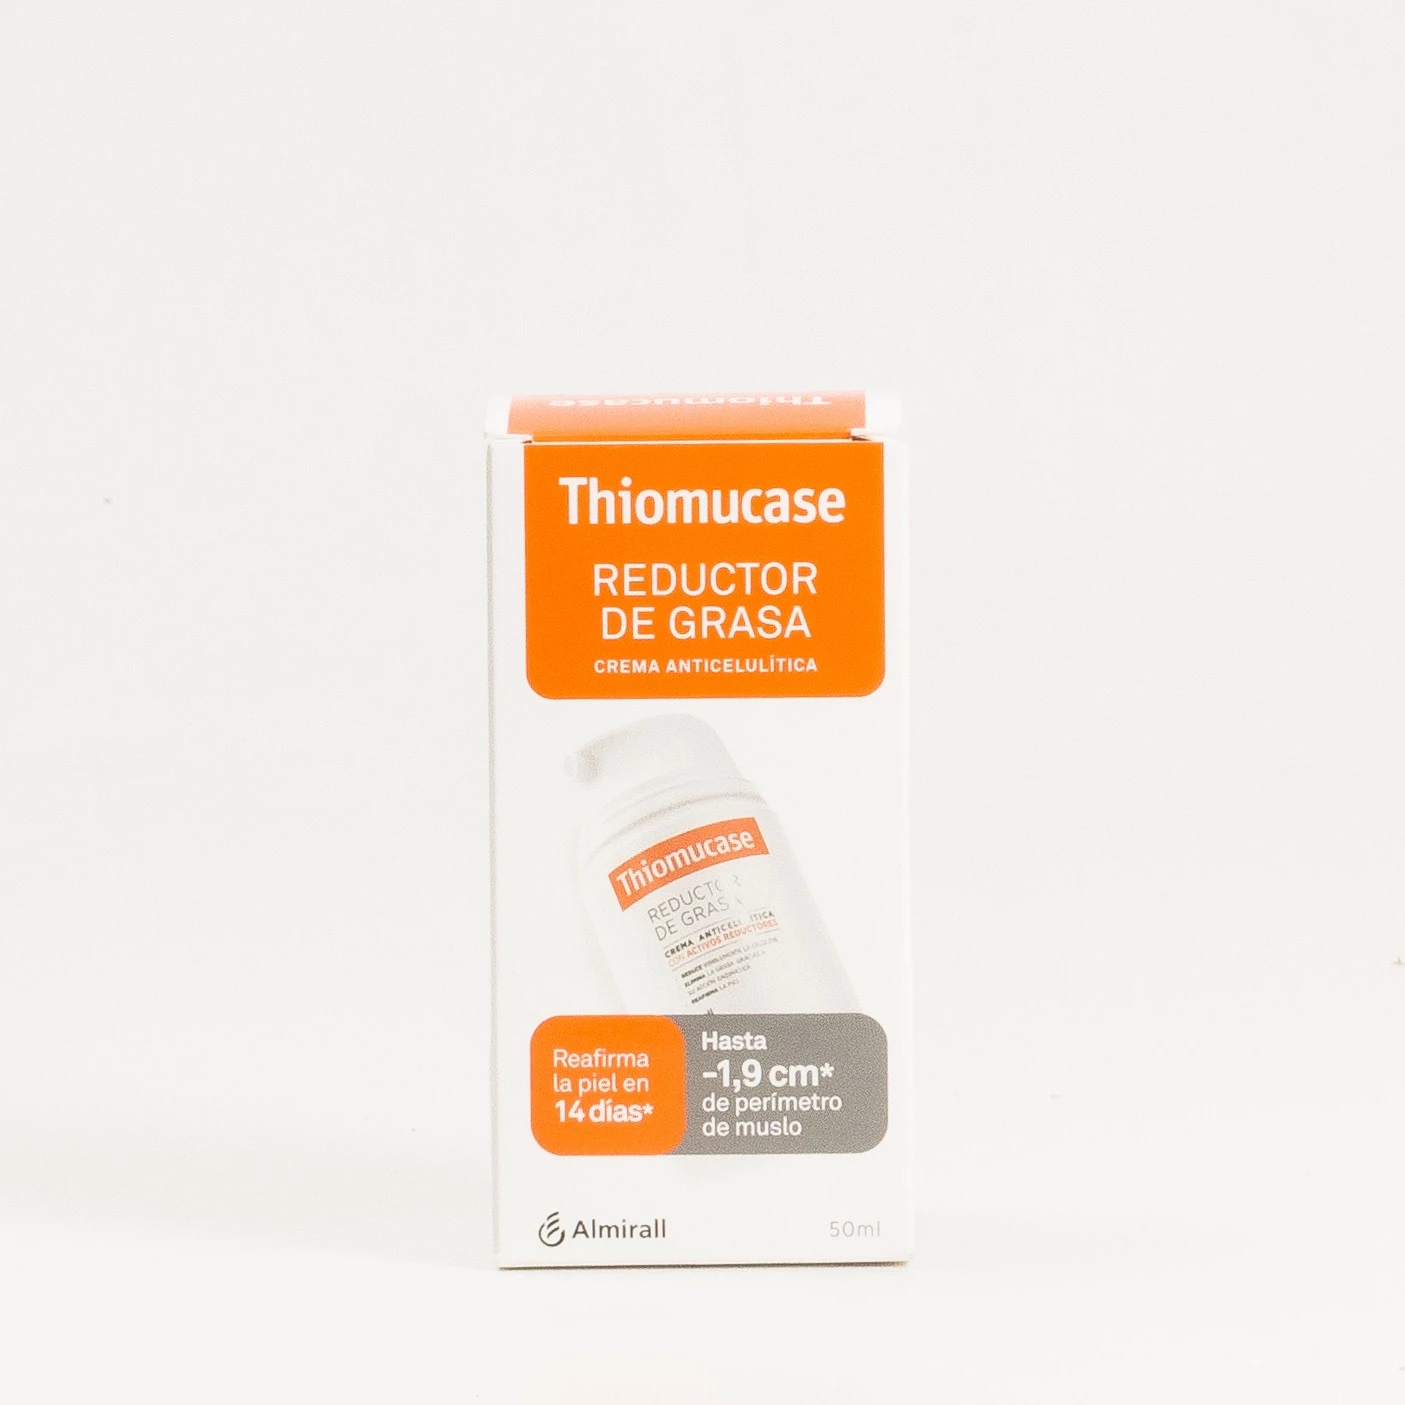 Thiomucase Reductor de grasa crema anticelulítica, 50ml.